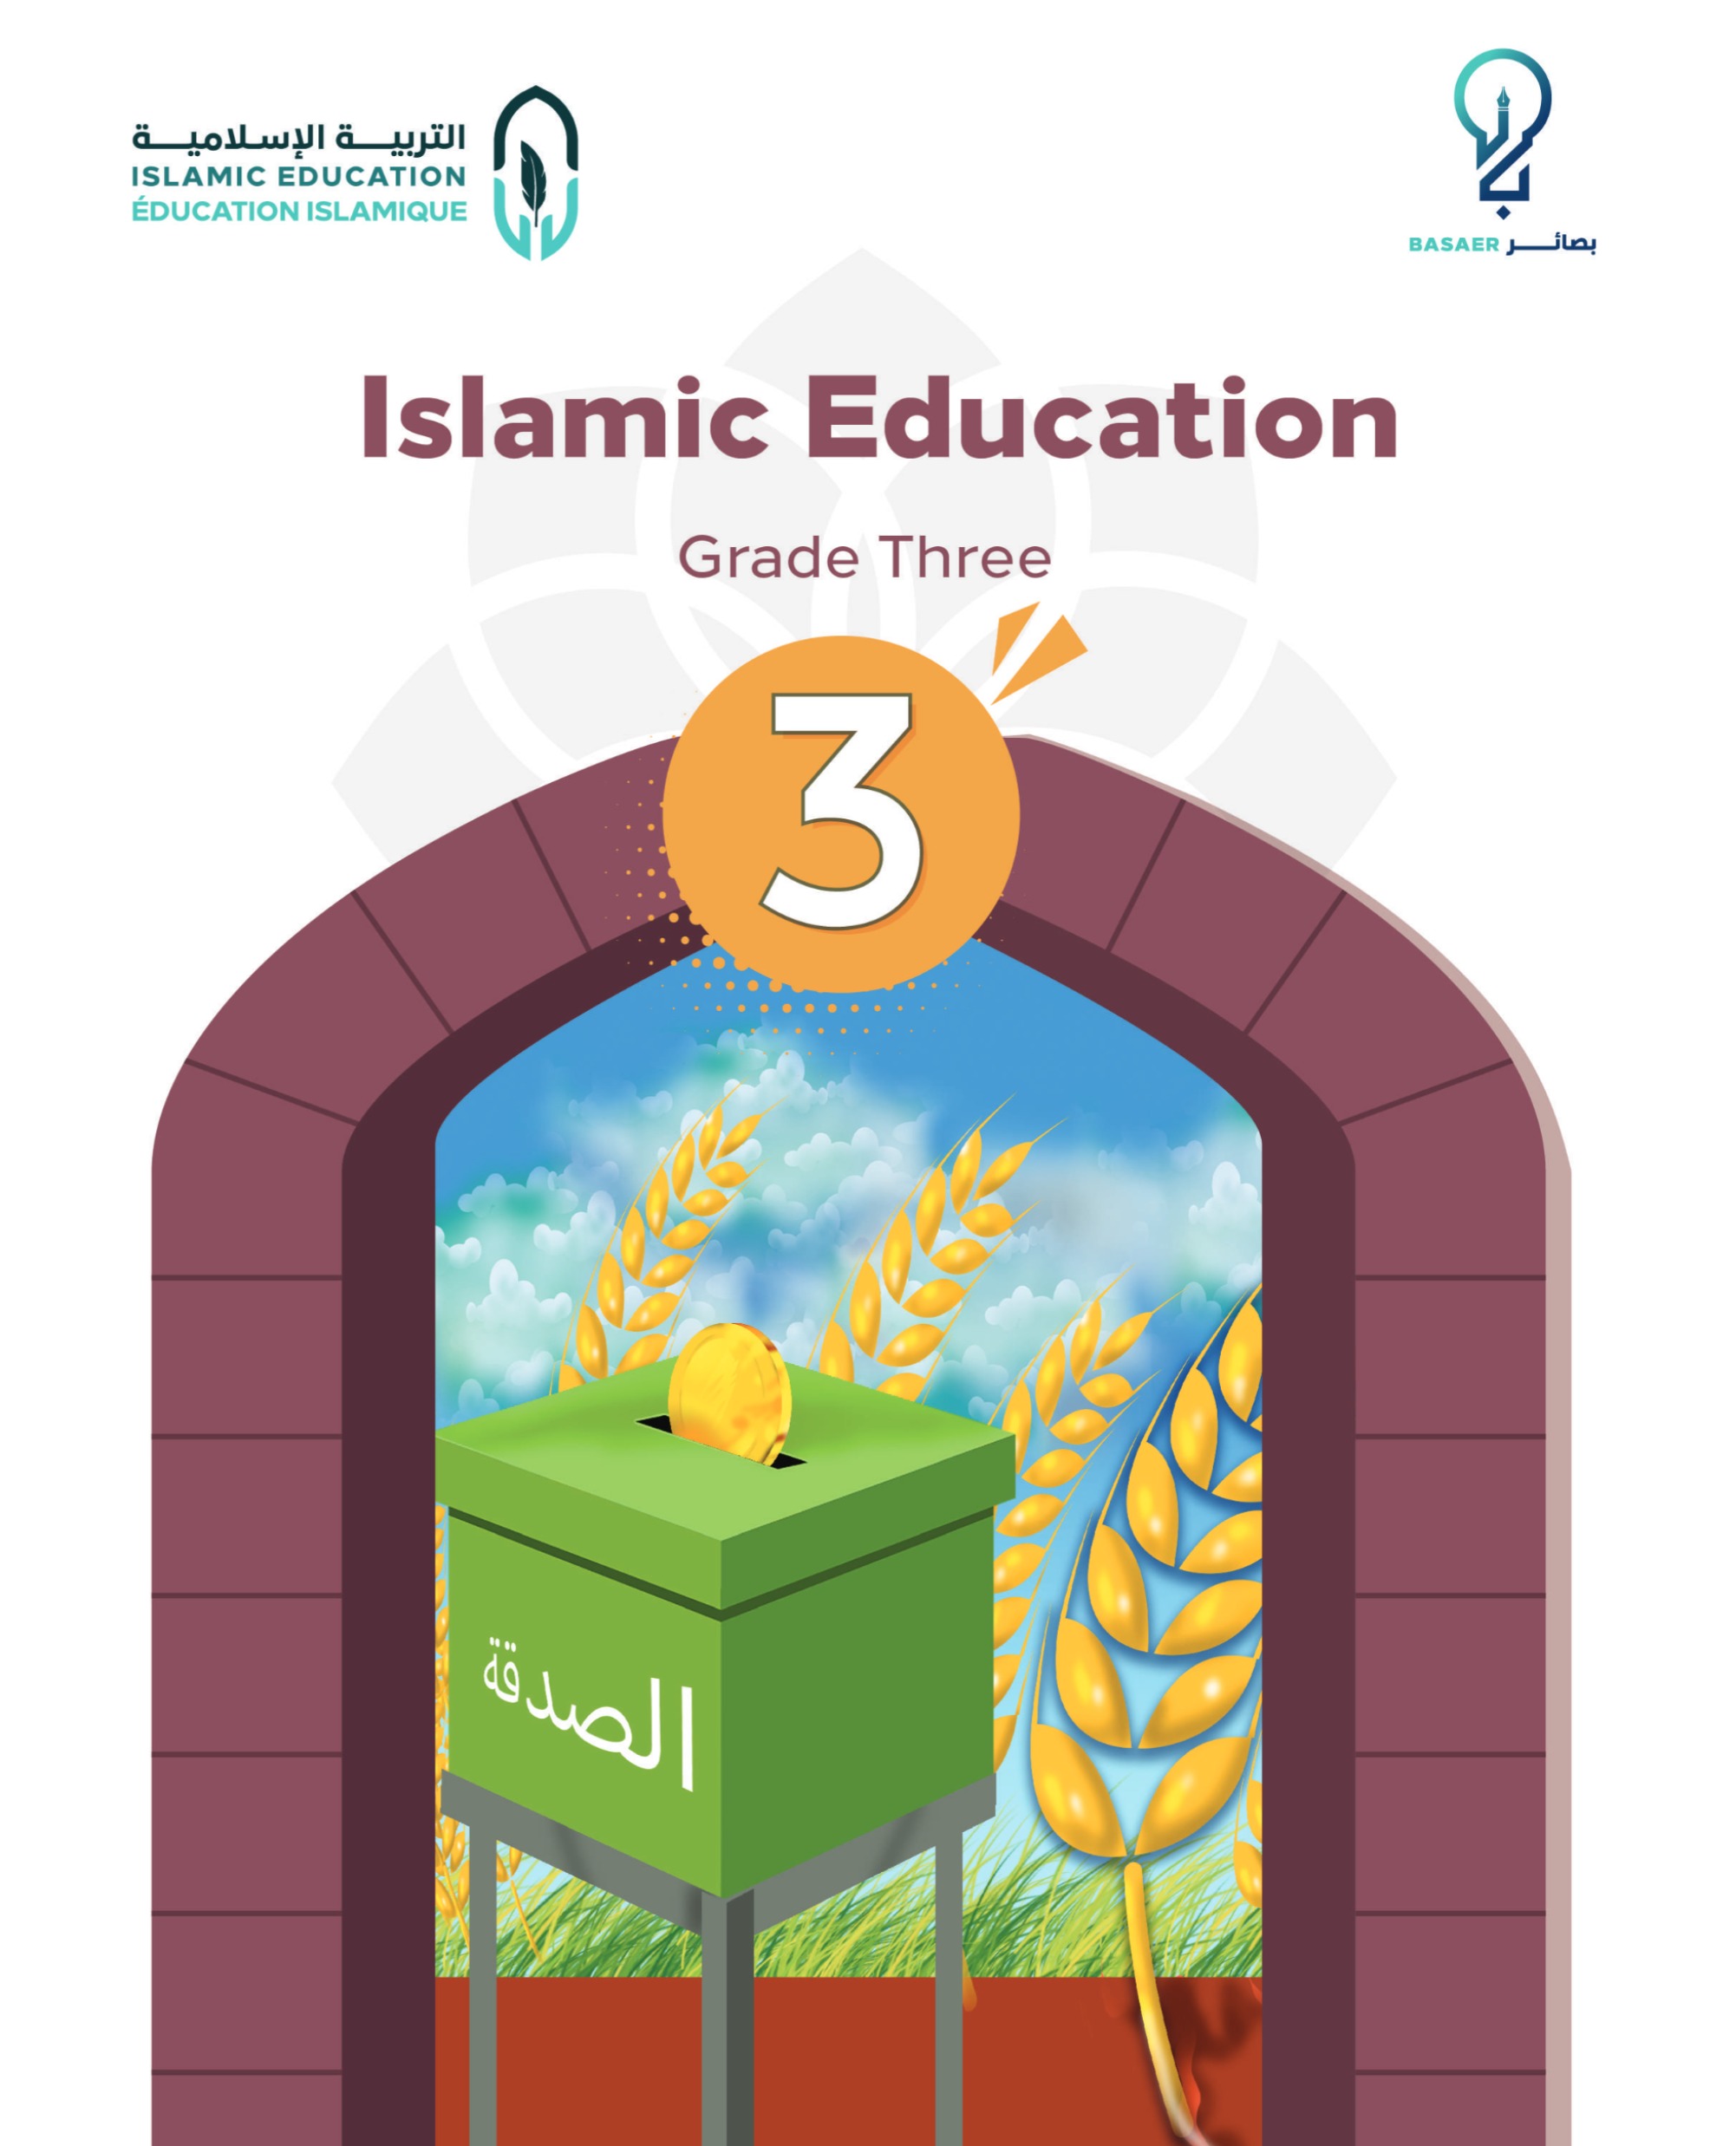 (3) Islamic Education